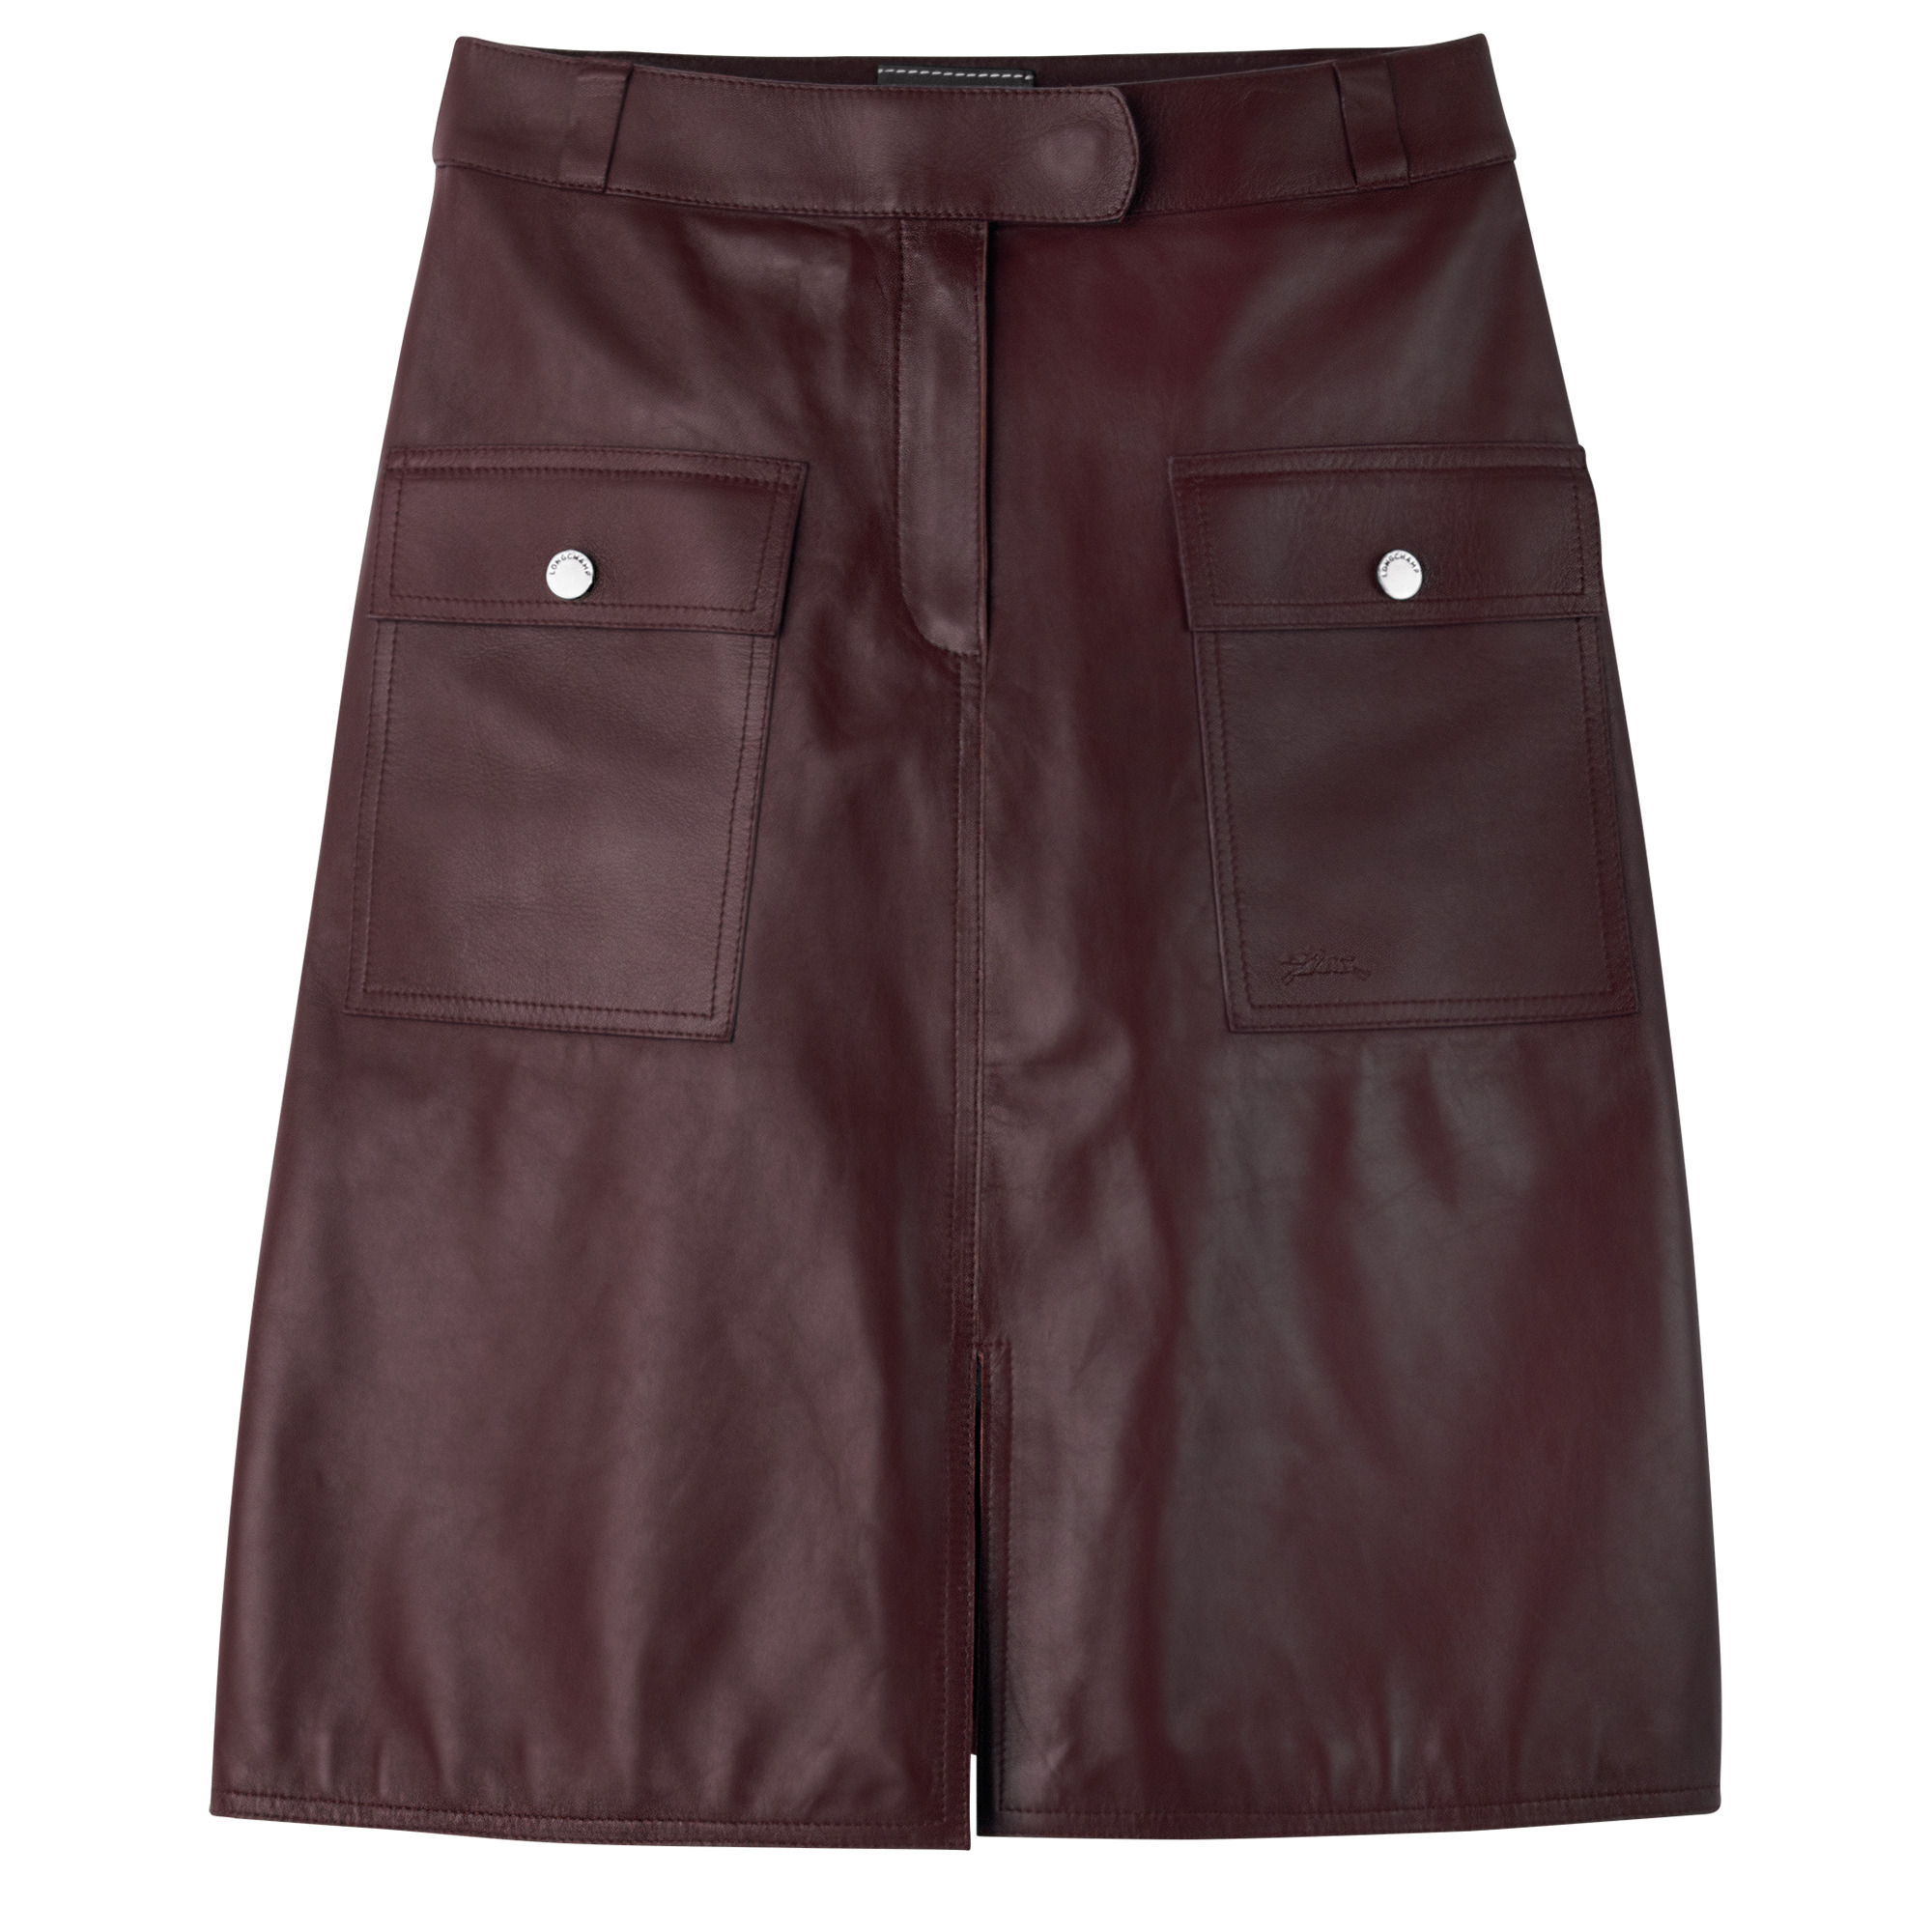 Skirt Plum - Leather - 1